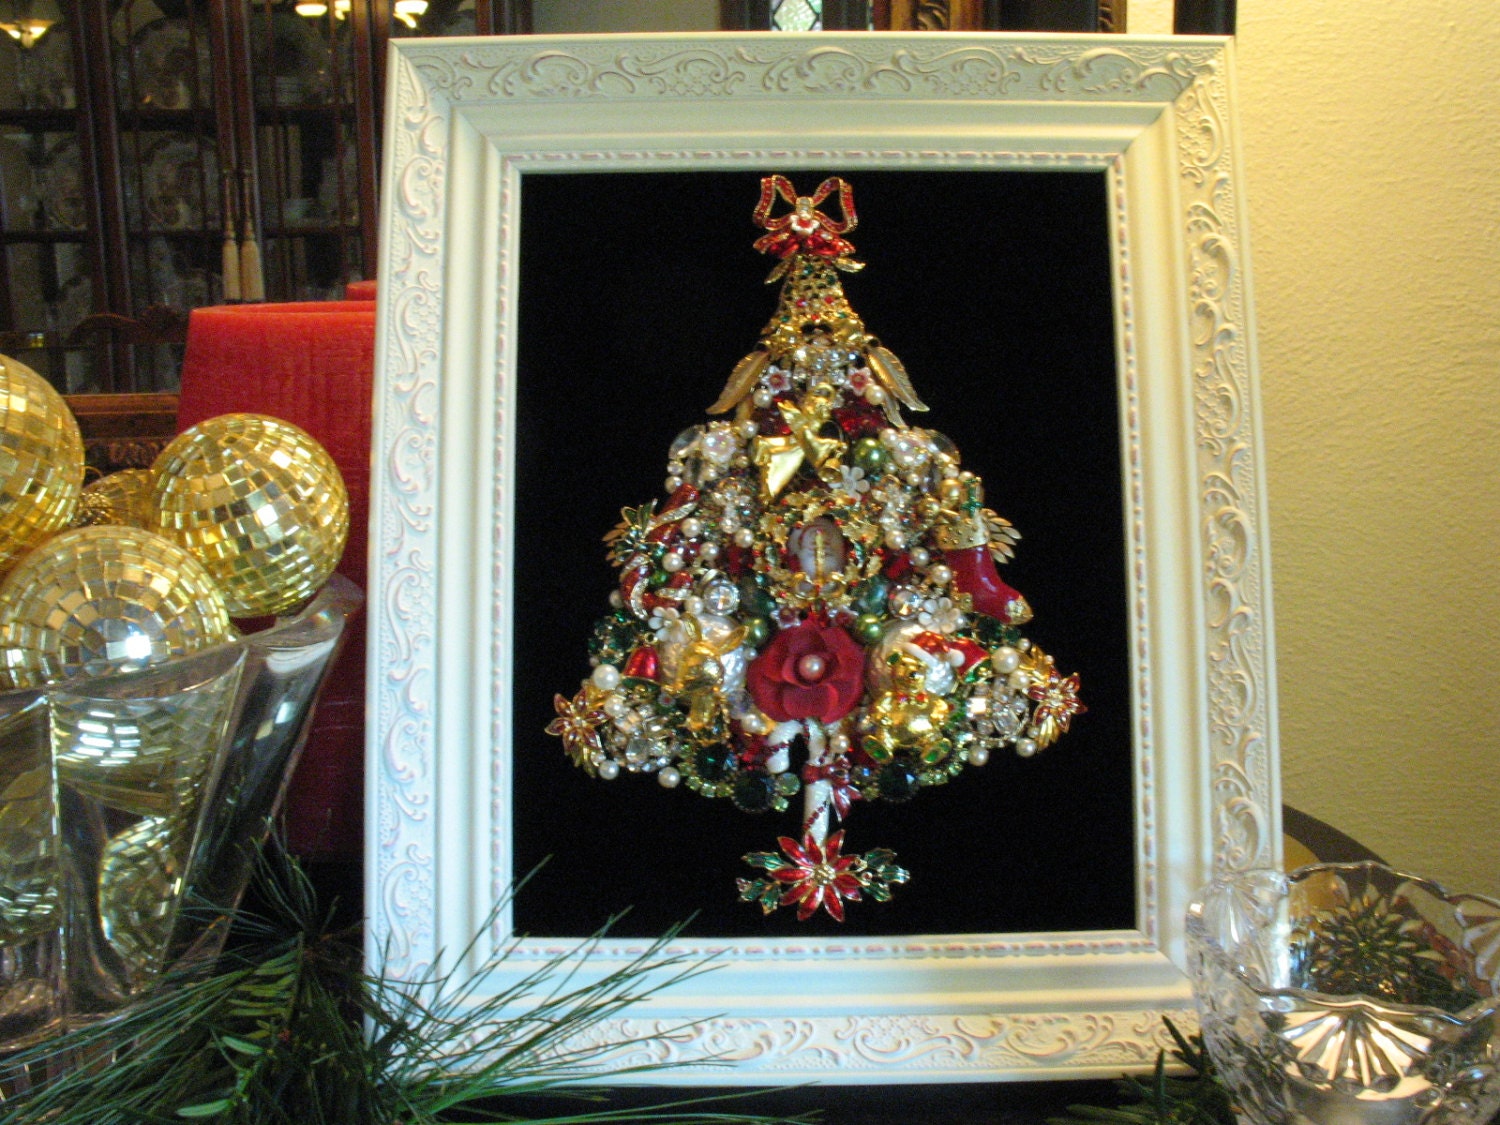 Framed Vintage Jewelry Christmas Tree Bell Angel Wreath Stocking Reindeer Teddy Bear Santa Claus Repurposed Collage Art SunnyDayVintage.com